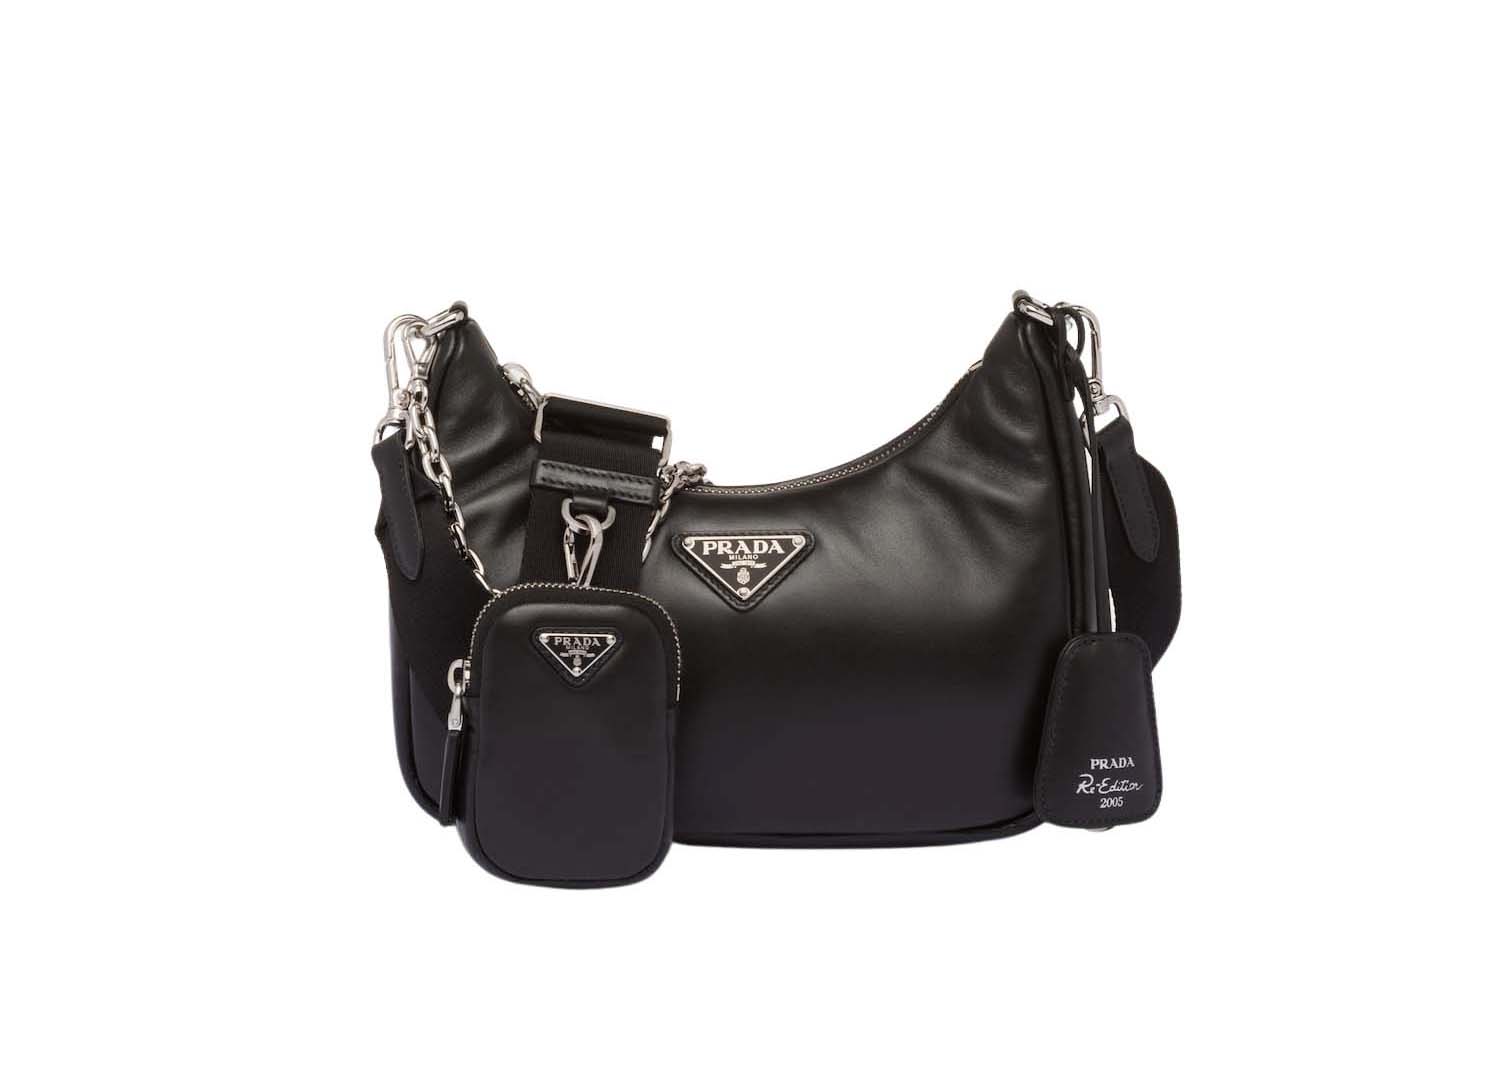 Prada Nylon & Leather Black Bag Authentic | eBay